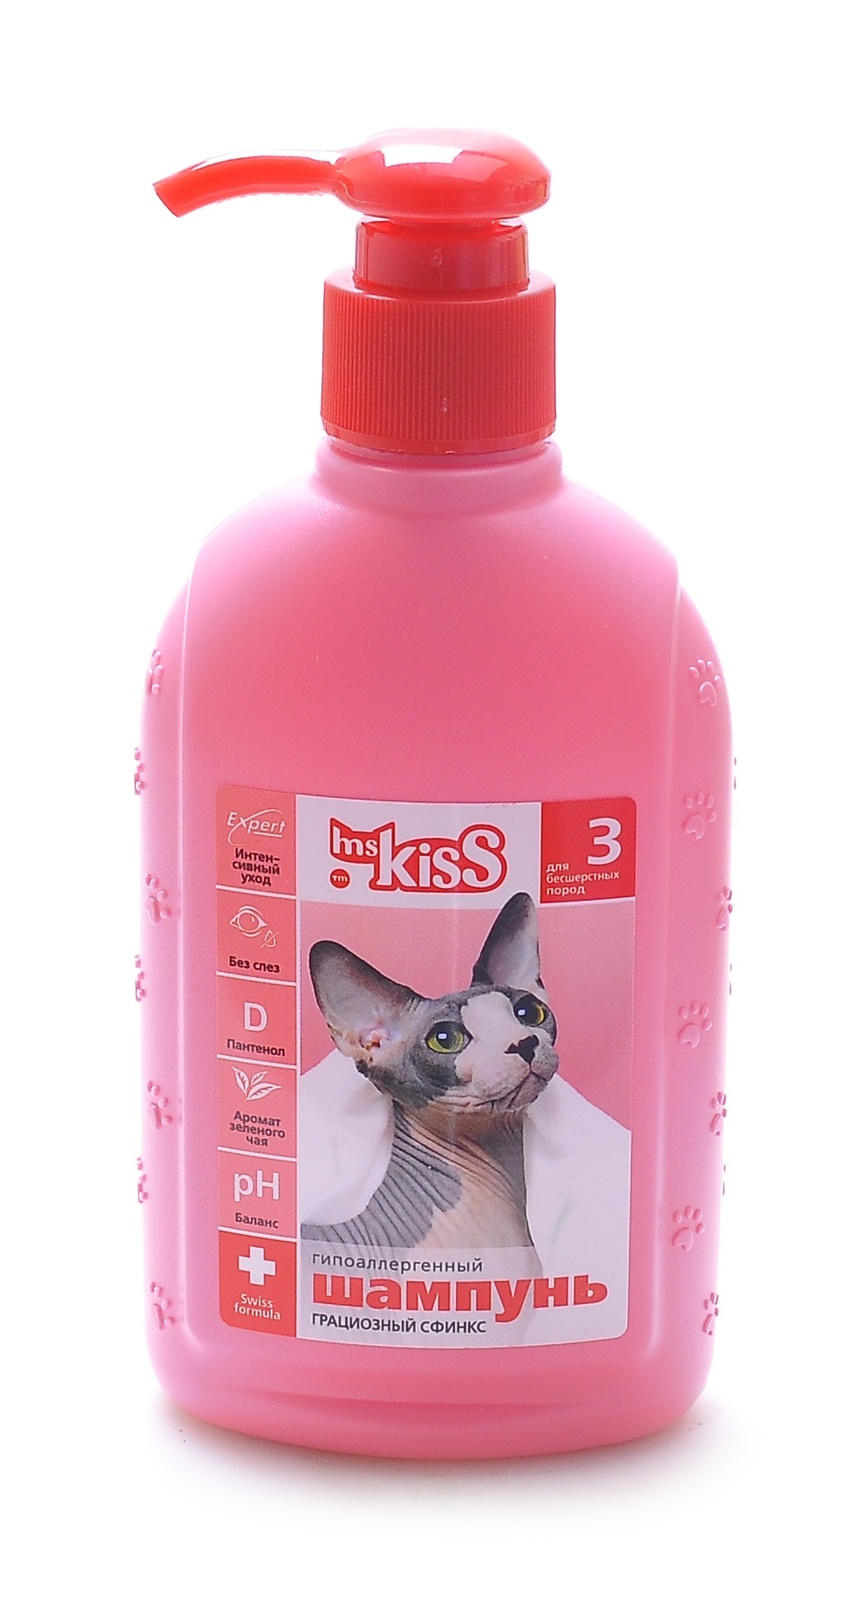 Ms.Kiss шампунь для бесшерстных пород 